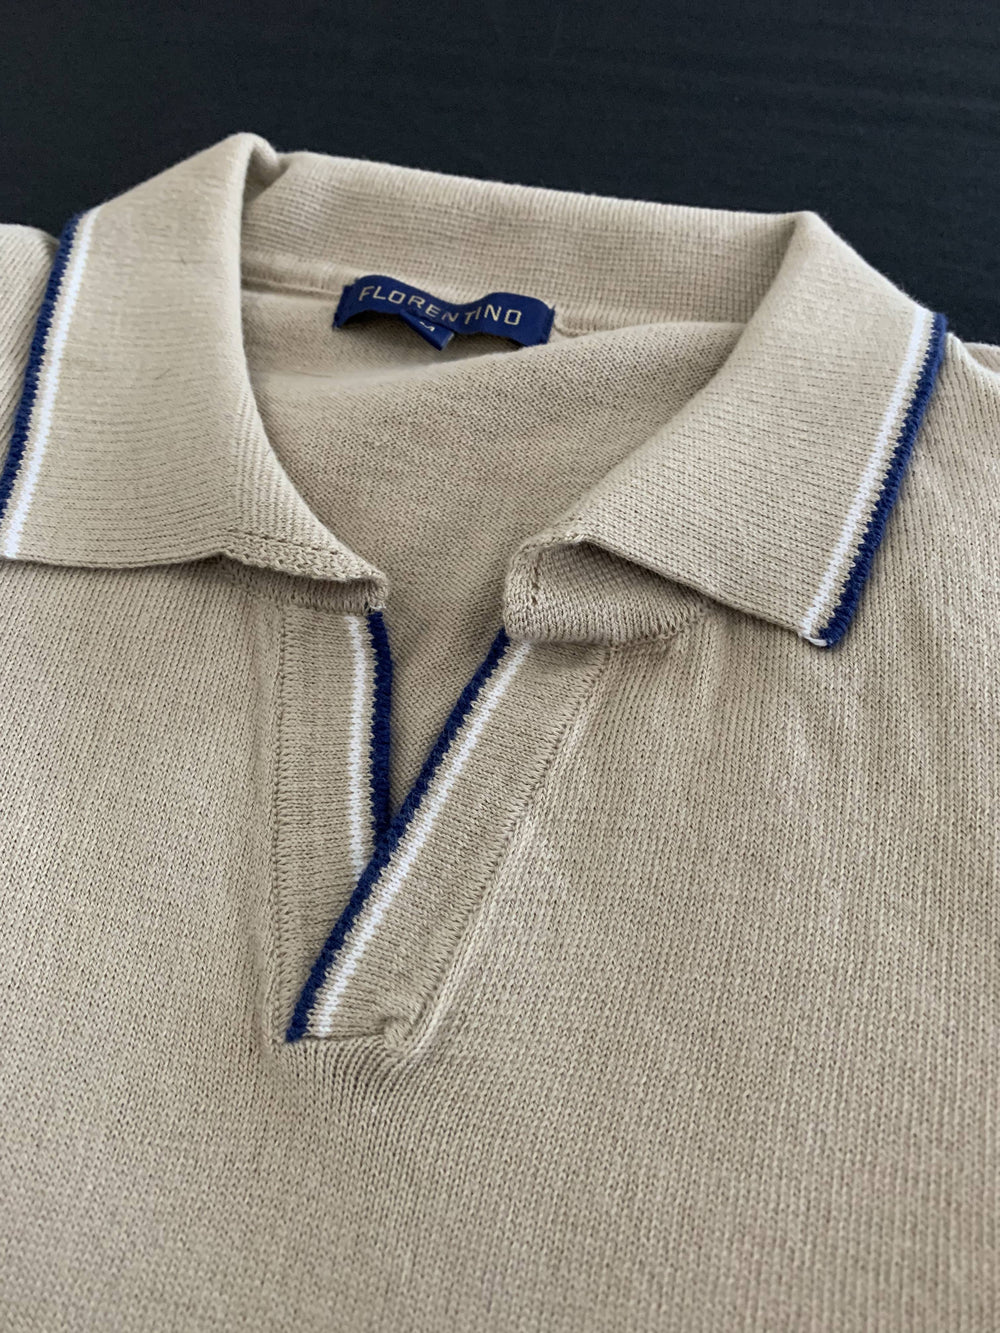 Florentino - Men's Polo Shirt in Khaki | Buster McGee